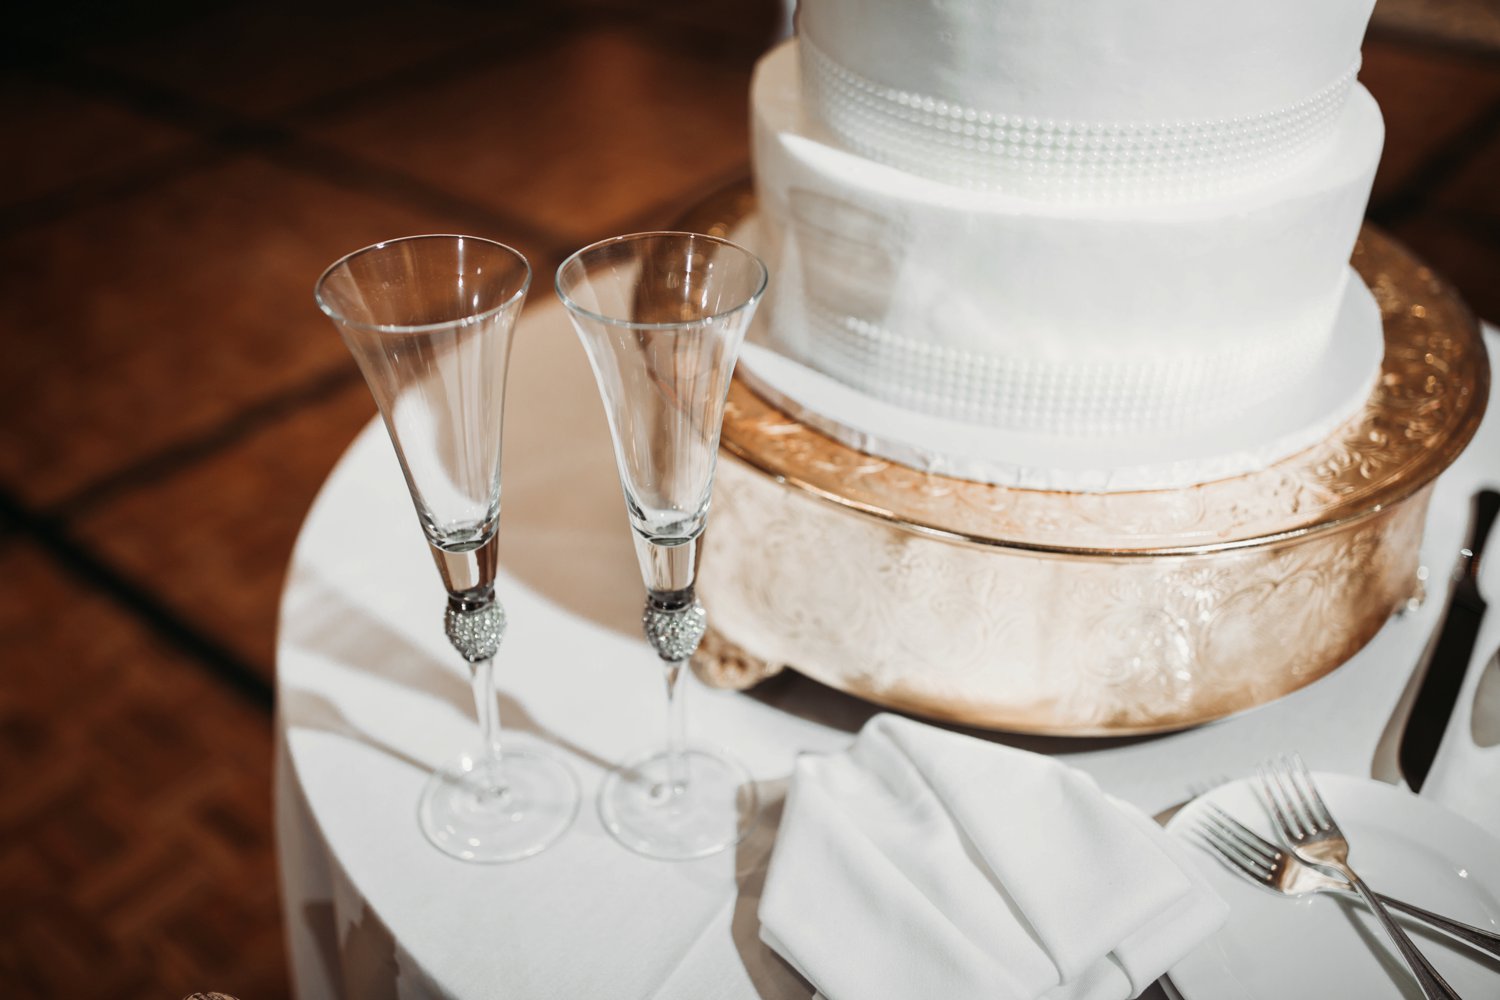  images by feliciathephotographer.com | destination wedding photographer | kansas city | summertime | classic | details | reception | cake | silver sparkle | sugar and spice catering | champagne flute | 